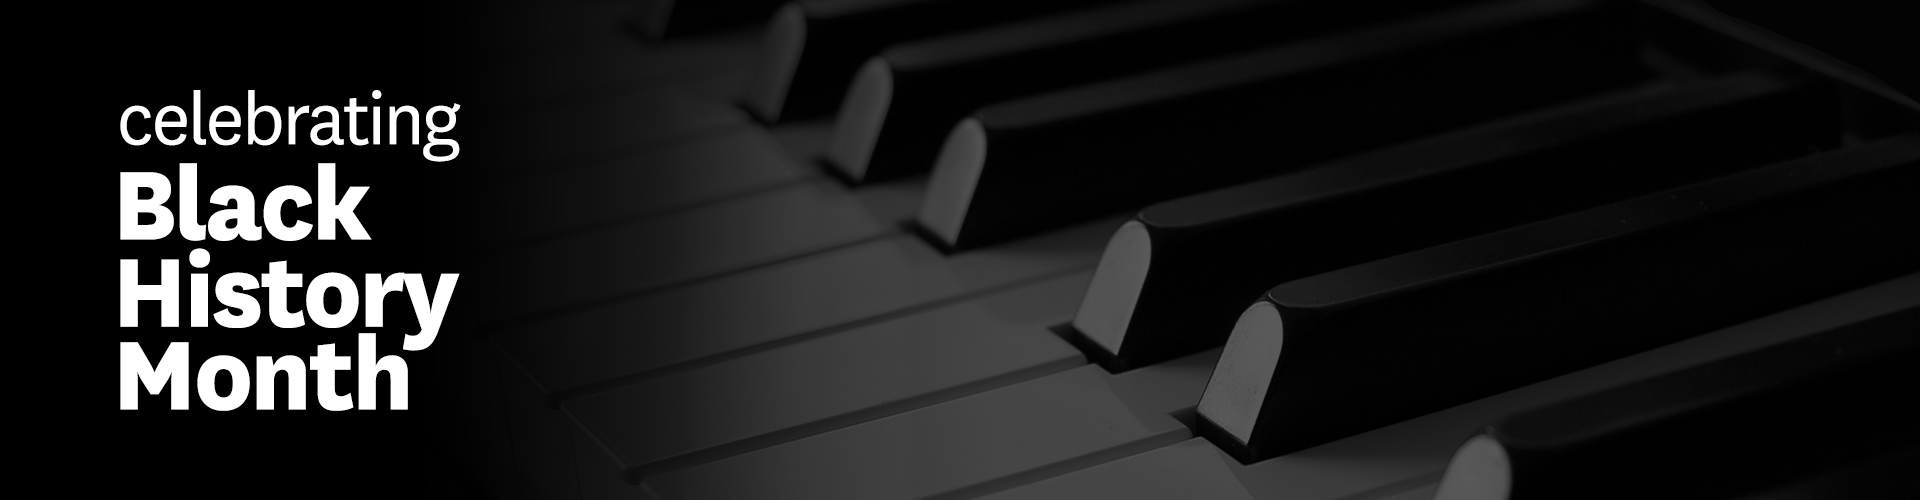 Black and white photo of piano keys.